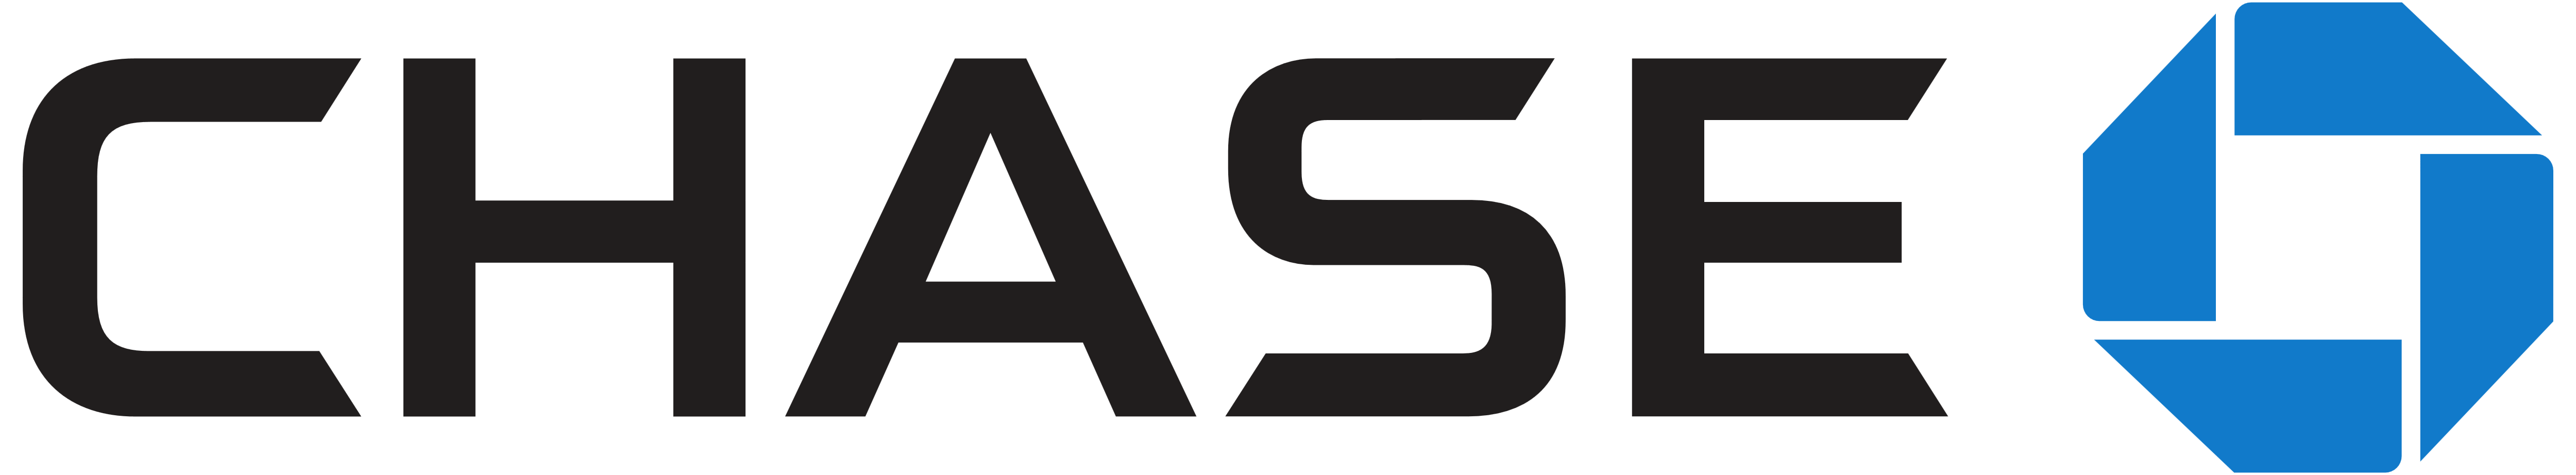 Chase brand logo